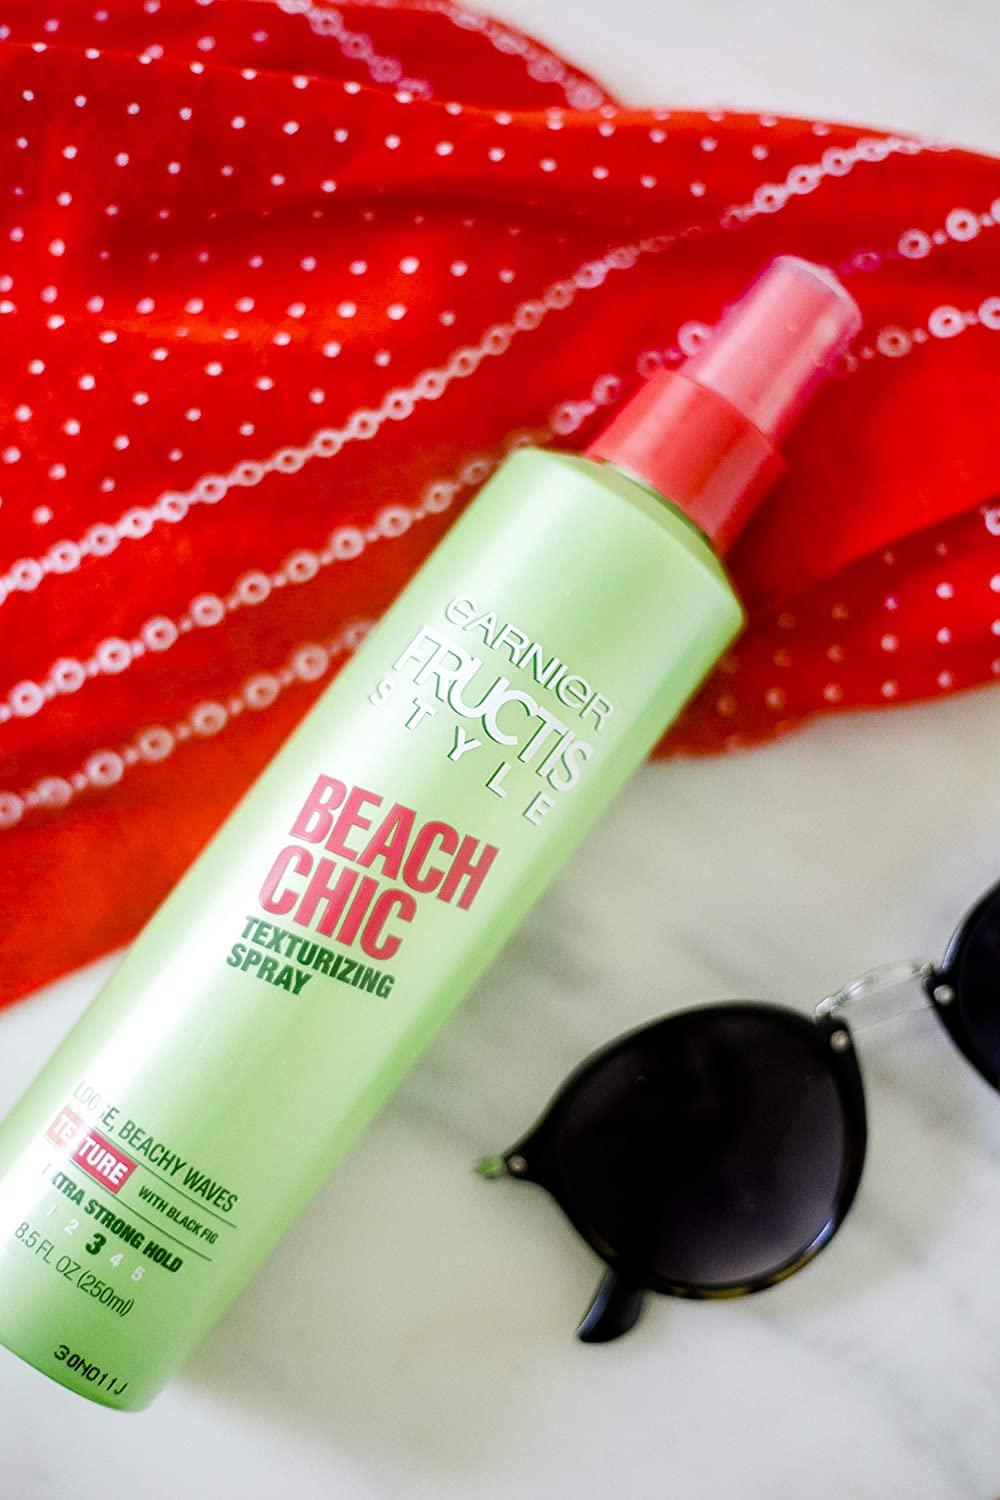 Garnier Fructis Style Beach Chic Texturizing Spray, All Hair Types,  oz.  (Packaging May Vary)